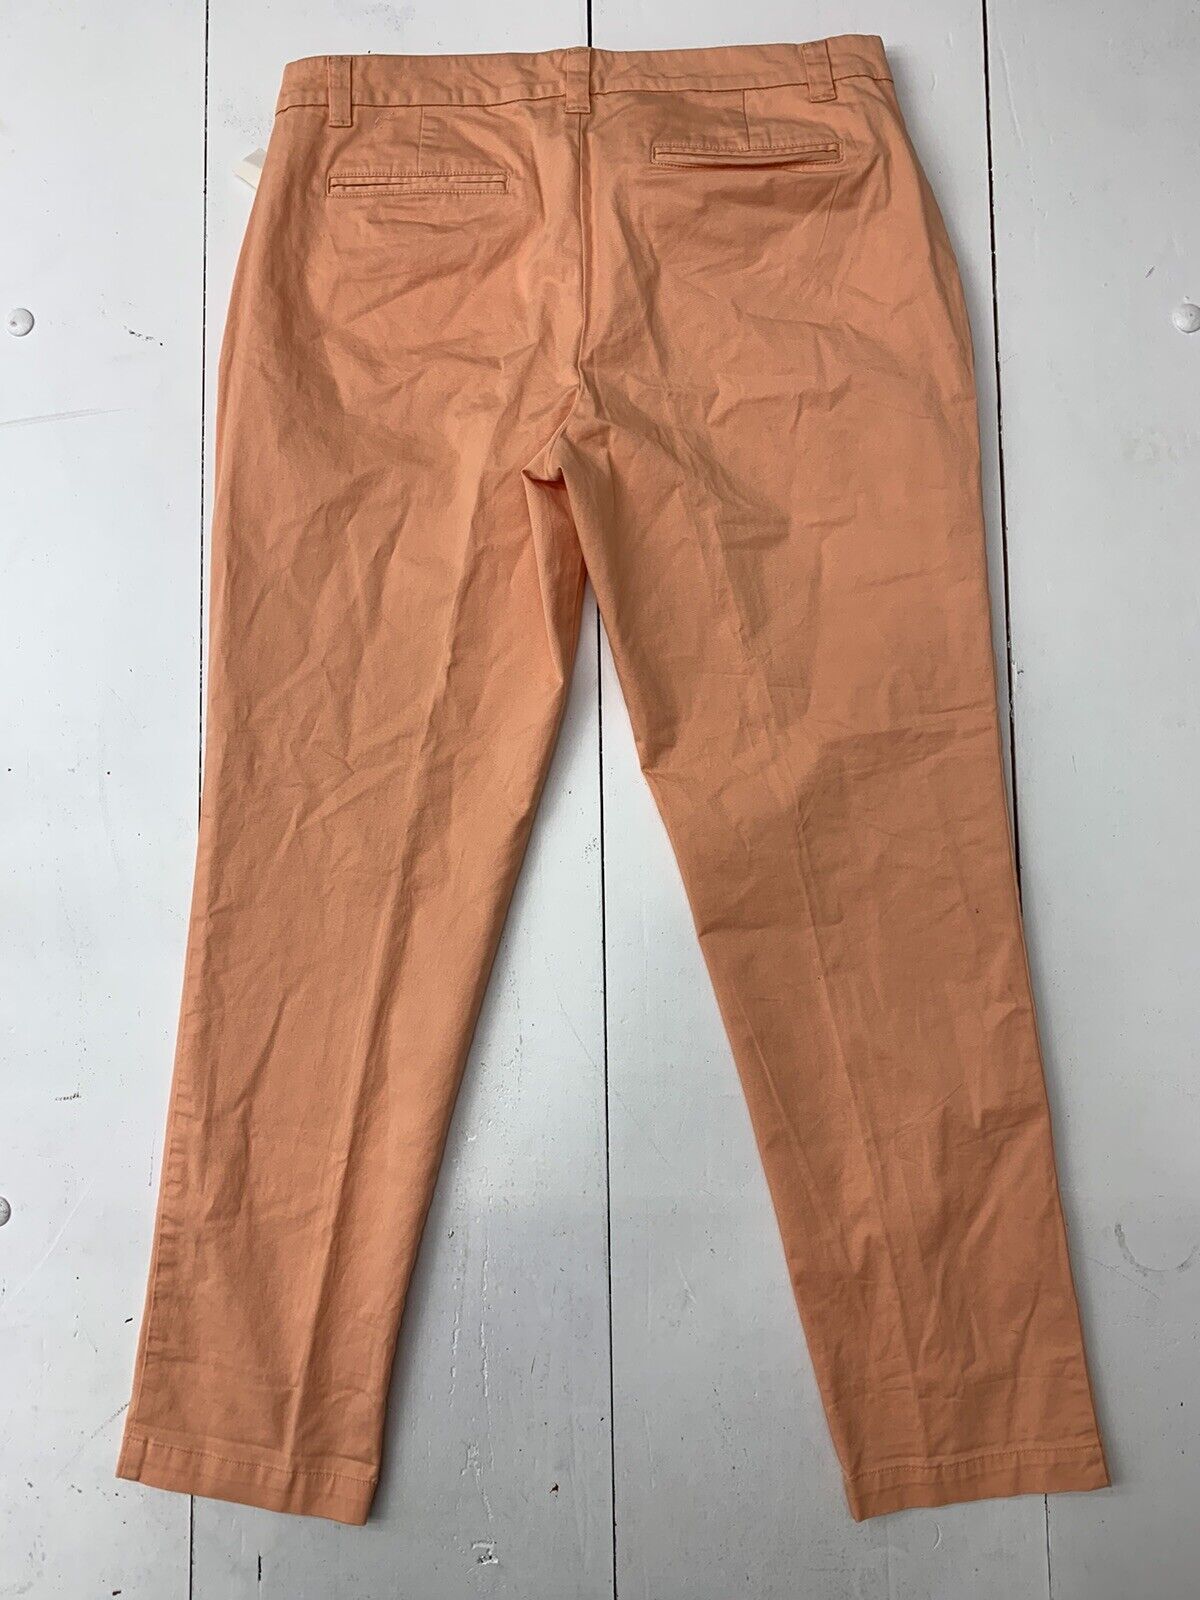 Gap Womens Orange Khakis Broken In Straight Pants Size 14 - beyond